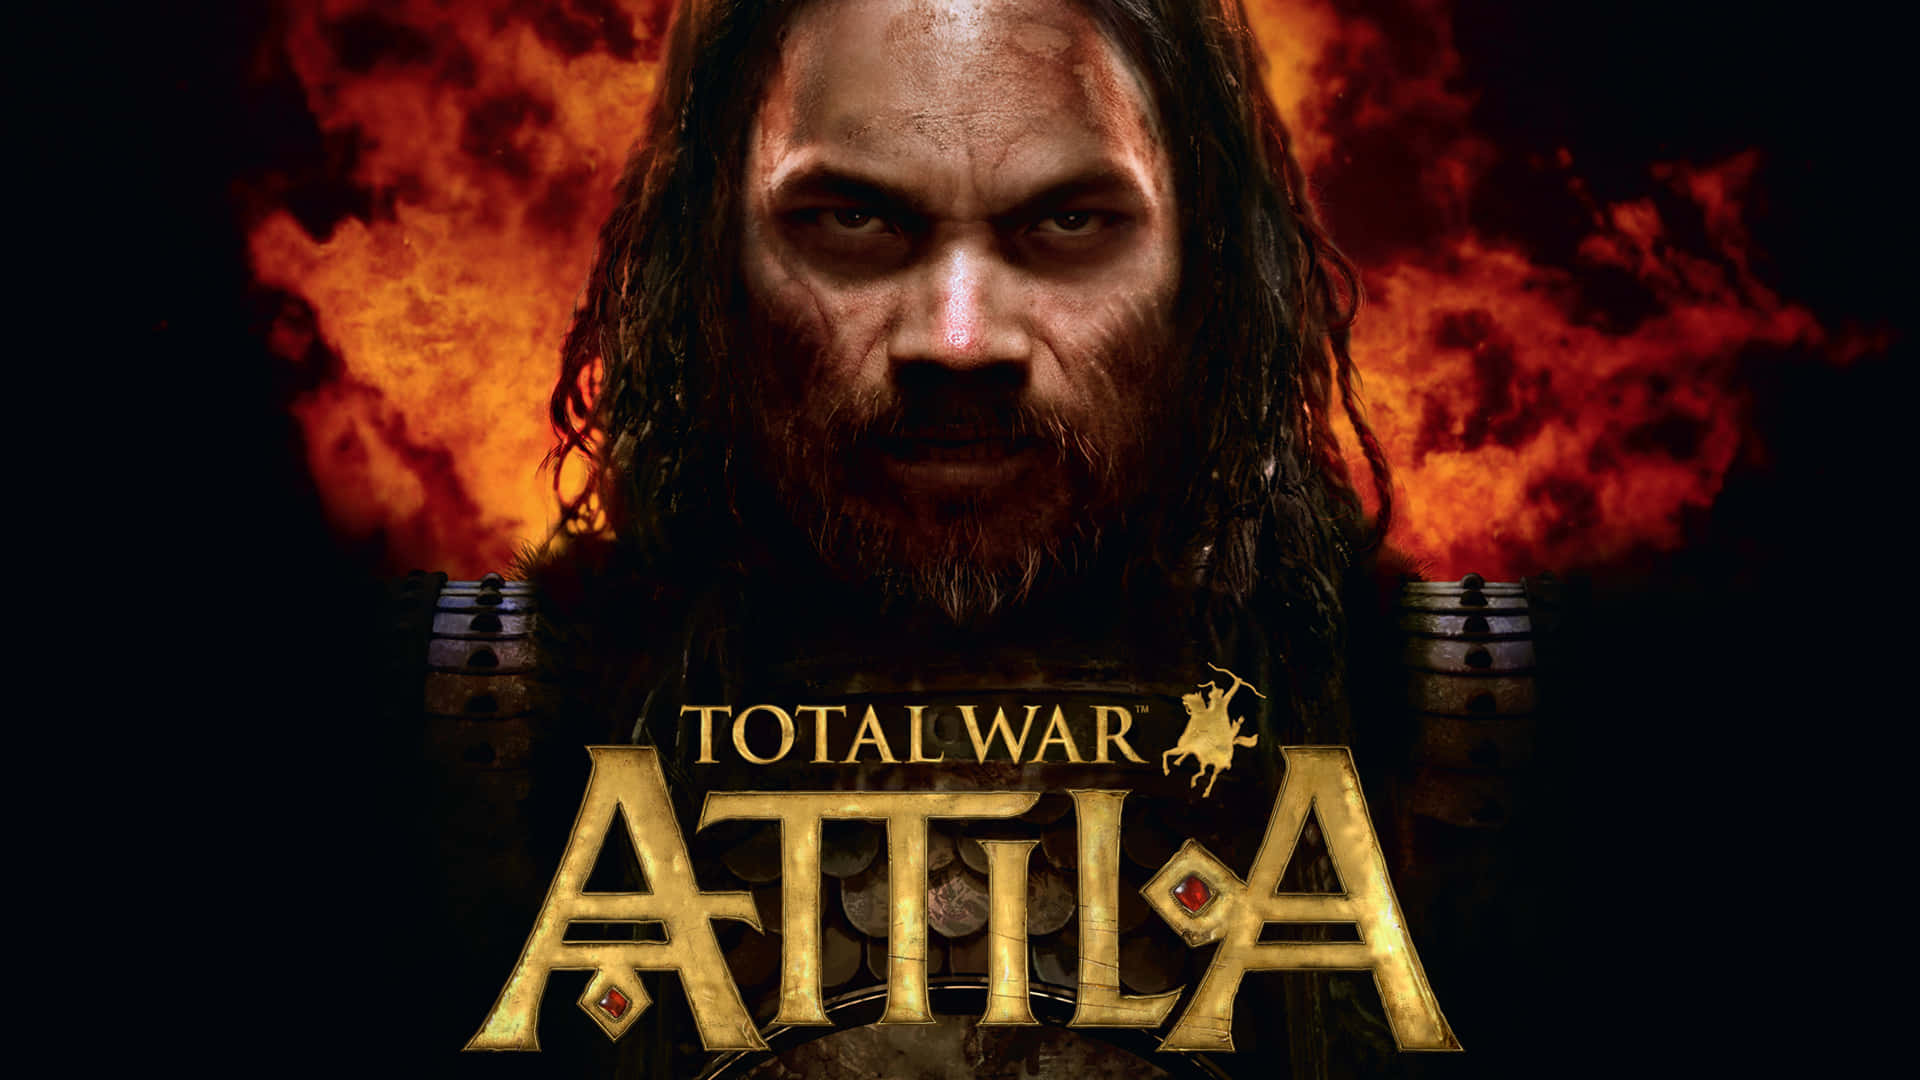 Command Rome's Legions to the Edge of the World in "Total War: Attila”